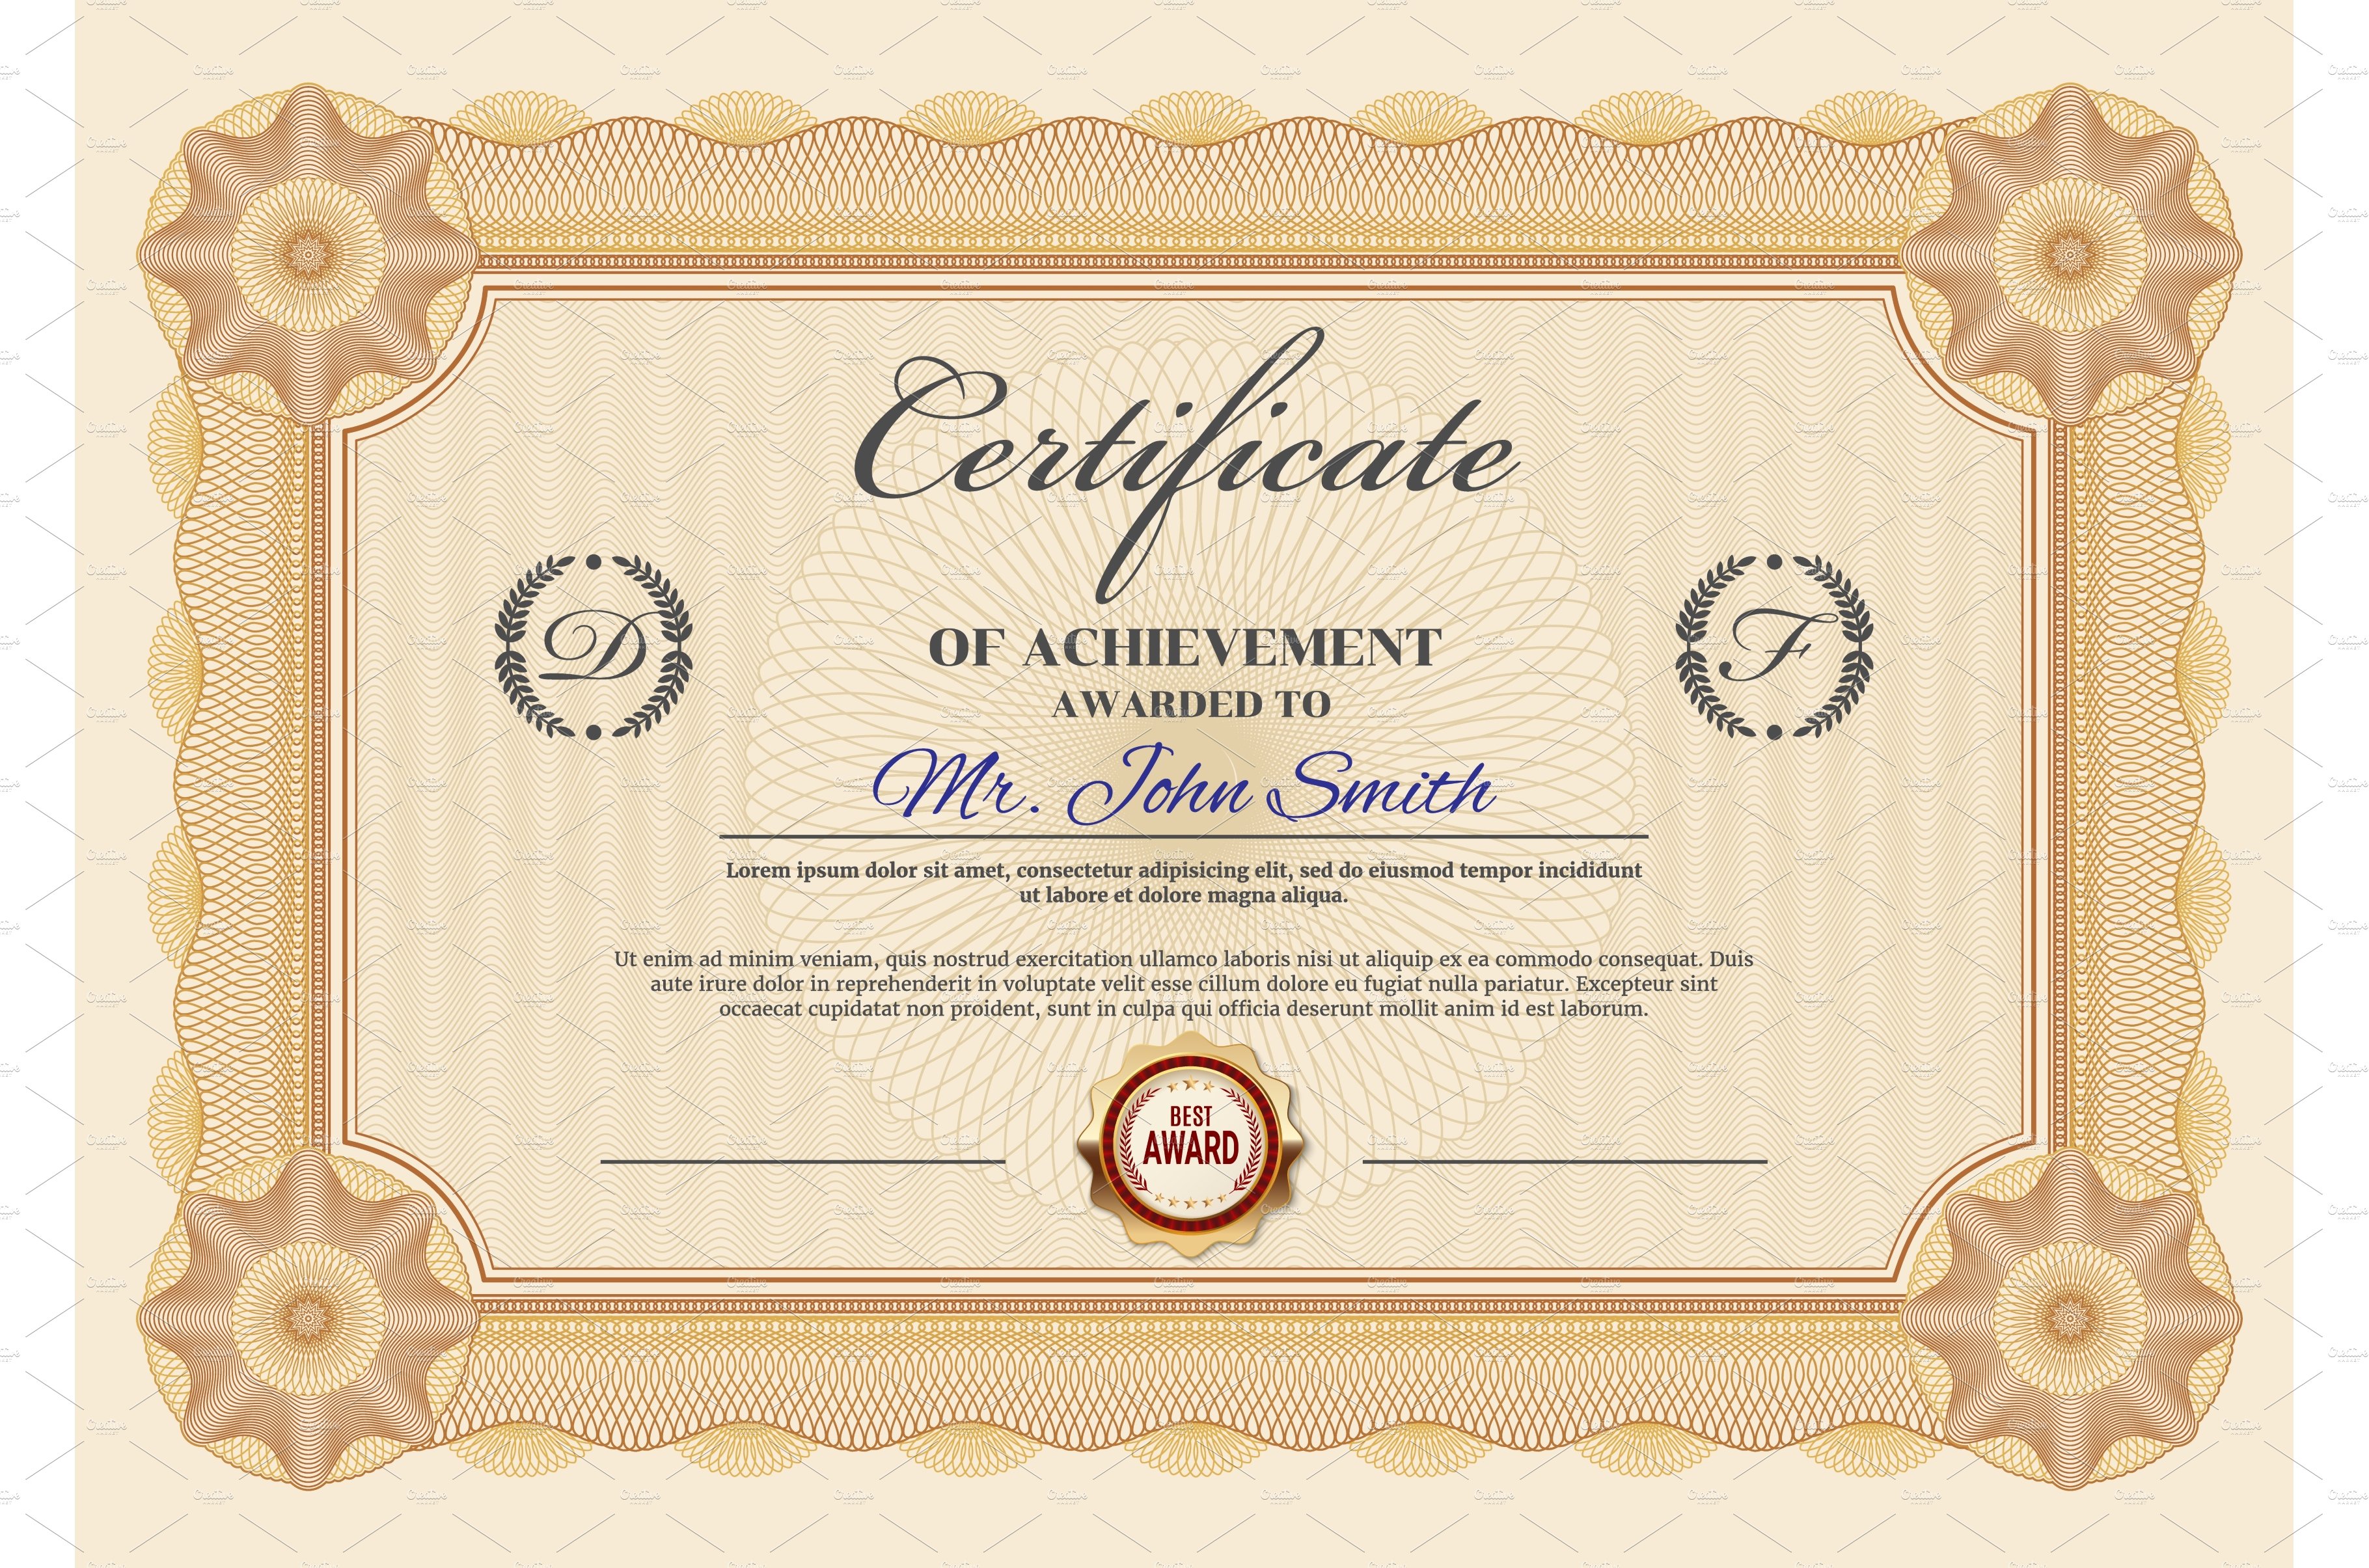 Achievement certificate template cover image.